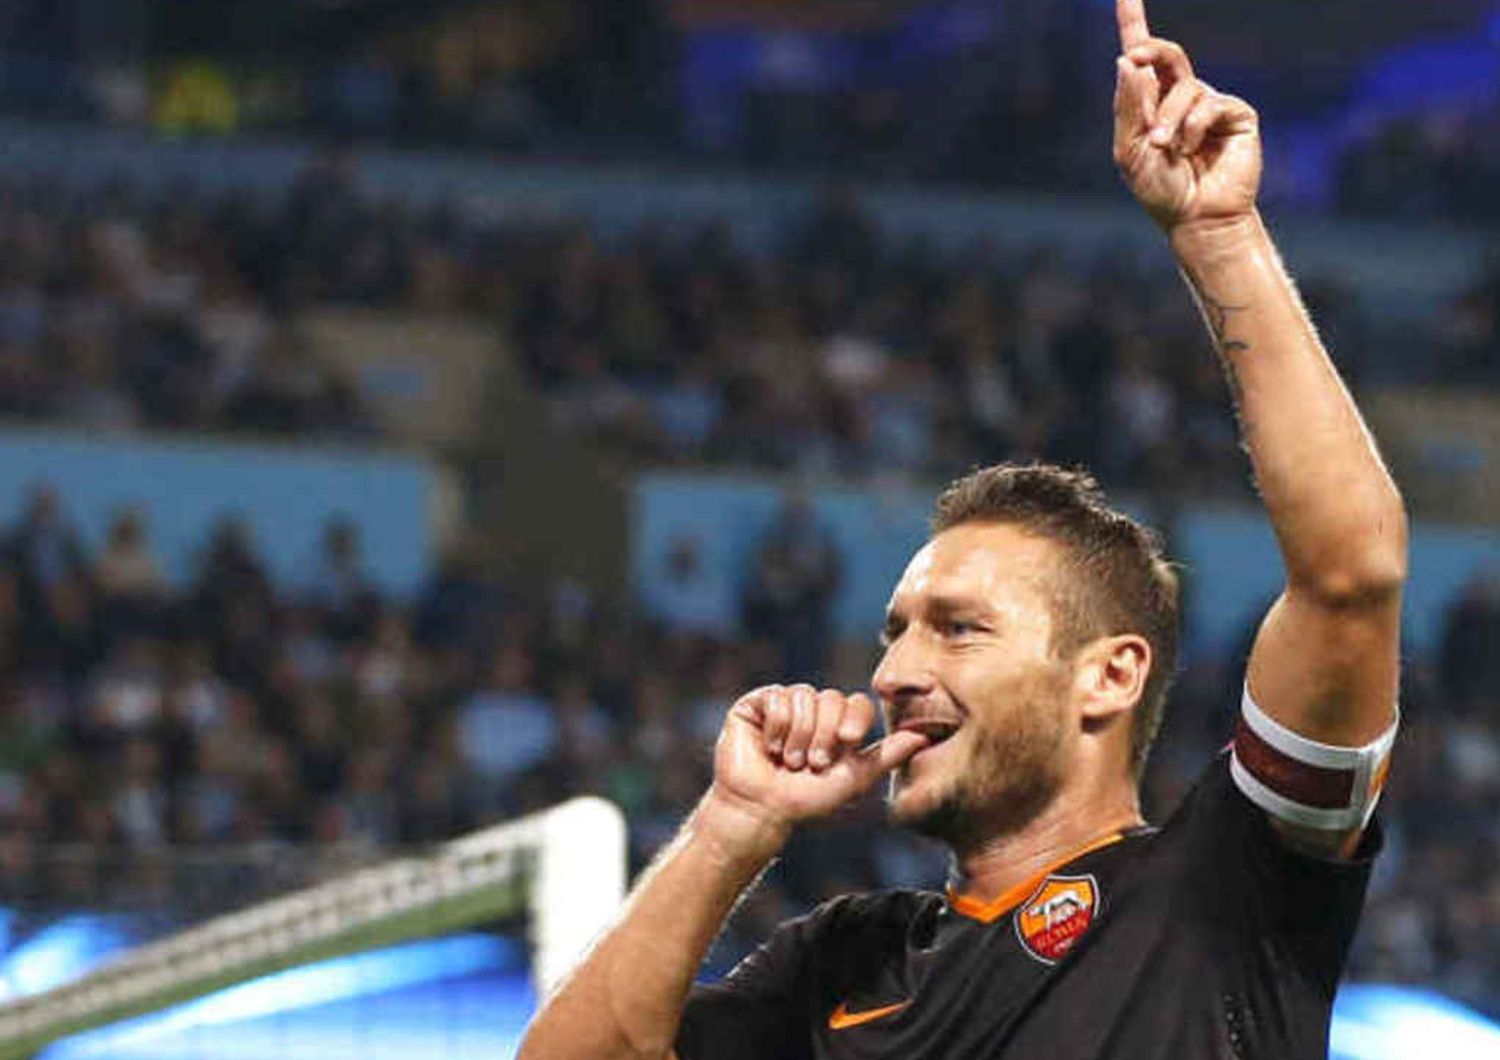 Champions: stampa Gb impazzisce per Totti, "Italian Maestro" "Legend" "Sublime"